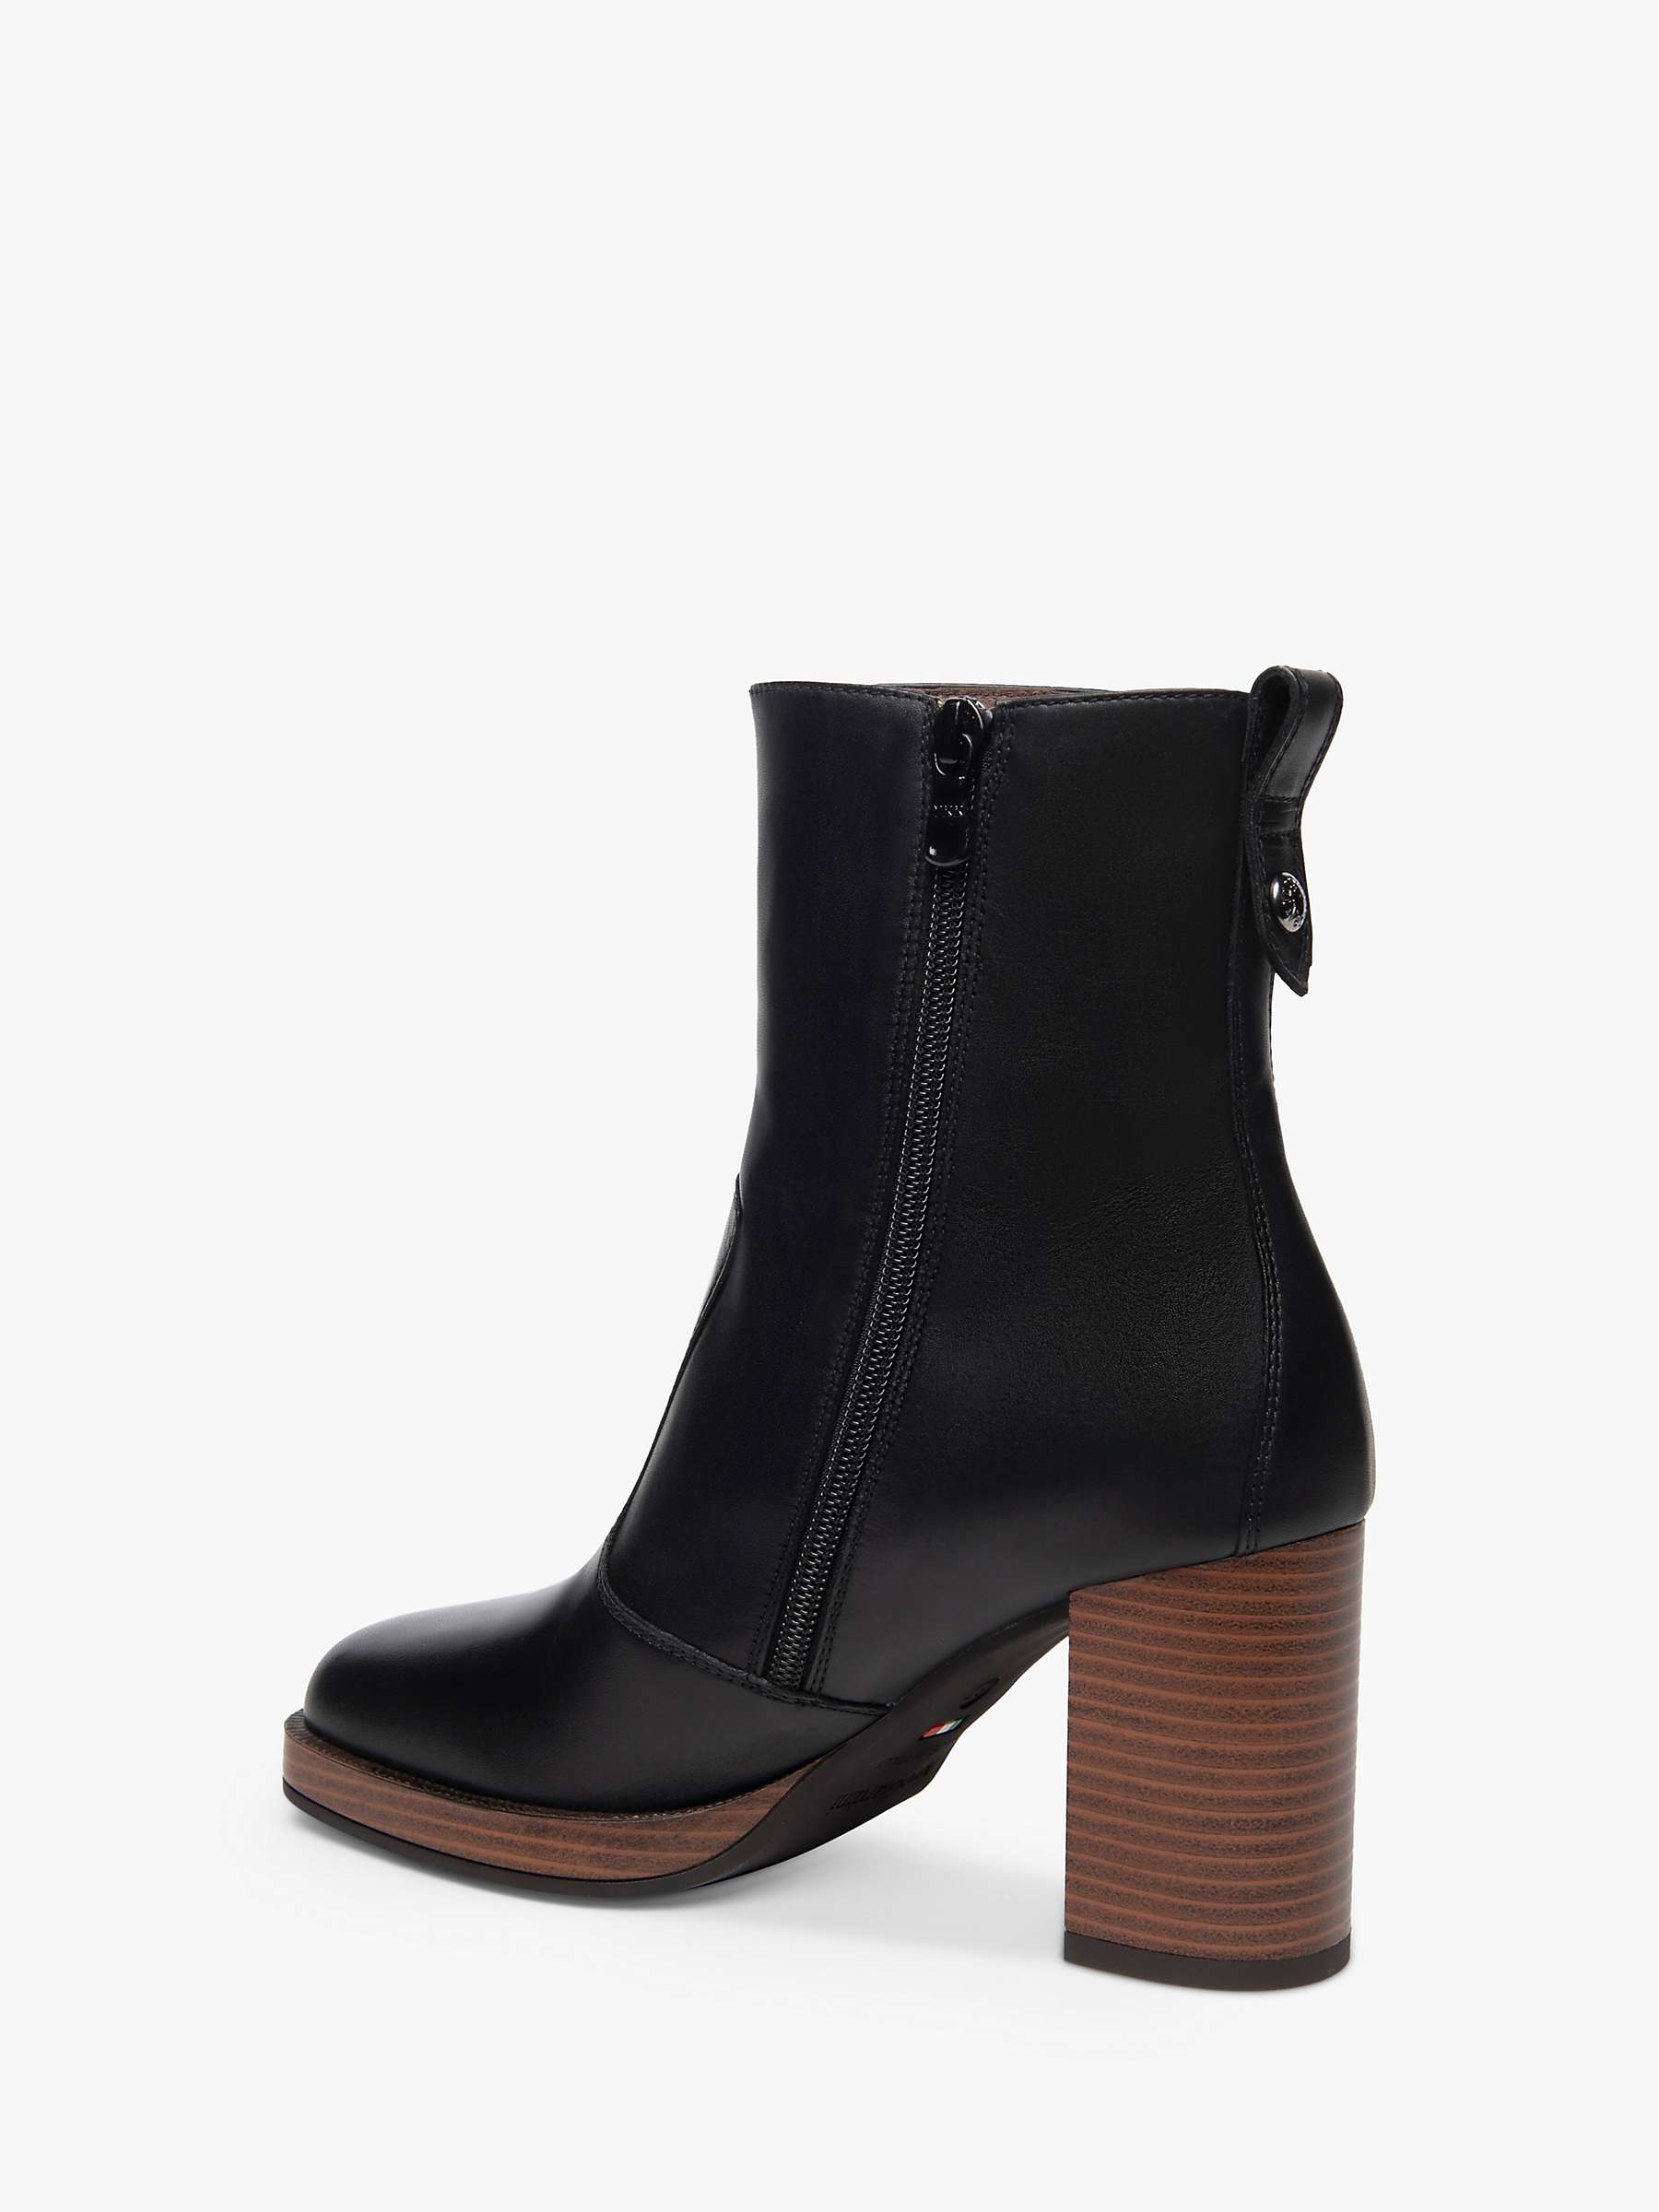 NeroGiardini Leather Square Toe Ankle Boots, Black at John Lewis & Partners